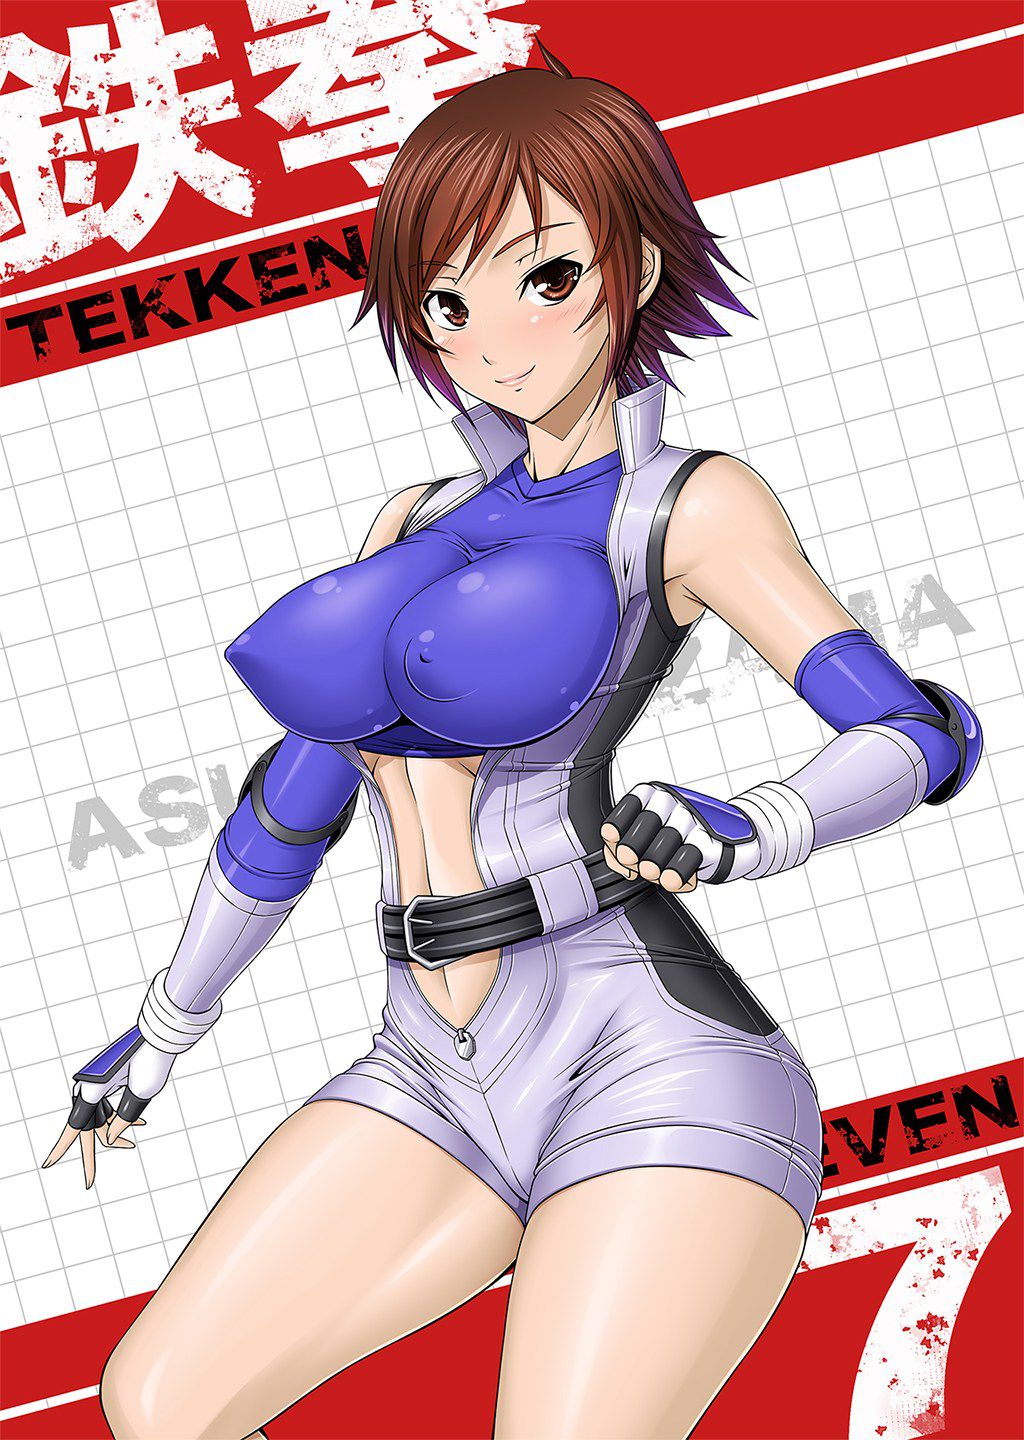 [64 photos] Tekken Asuka Kazama the erotic pictures! Part 3 22